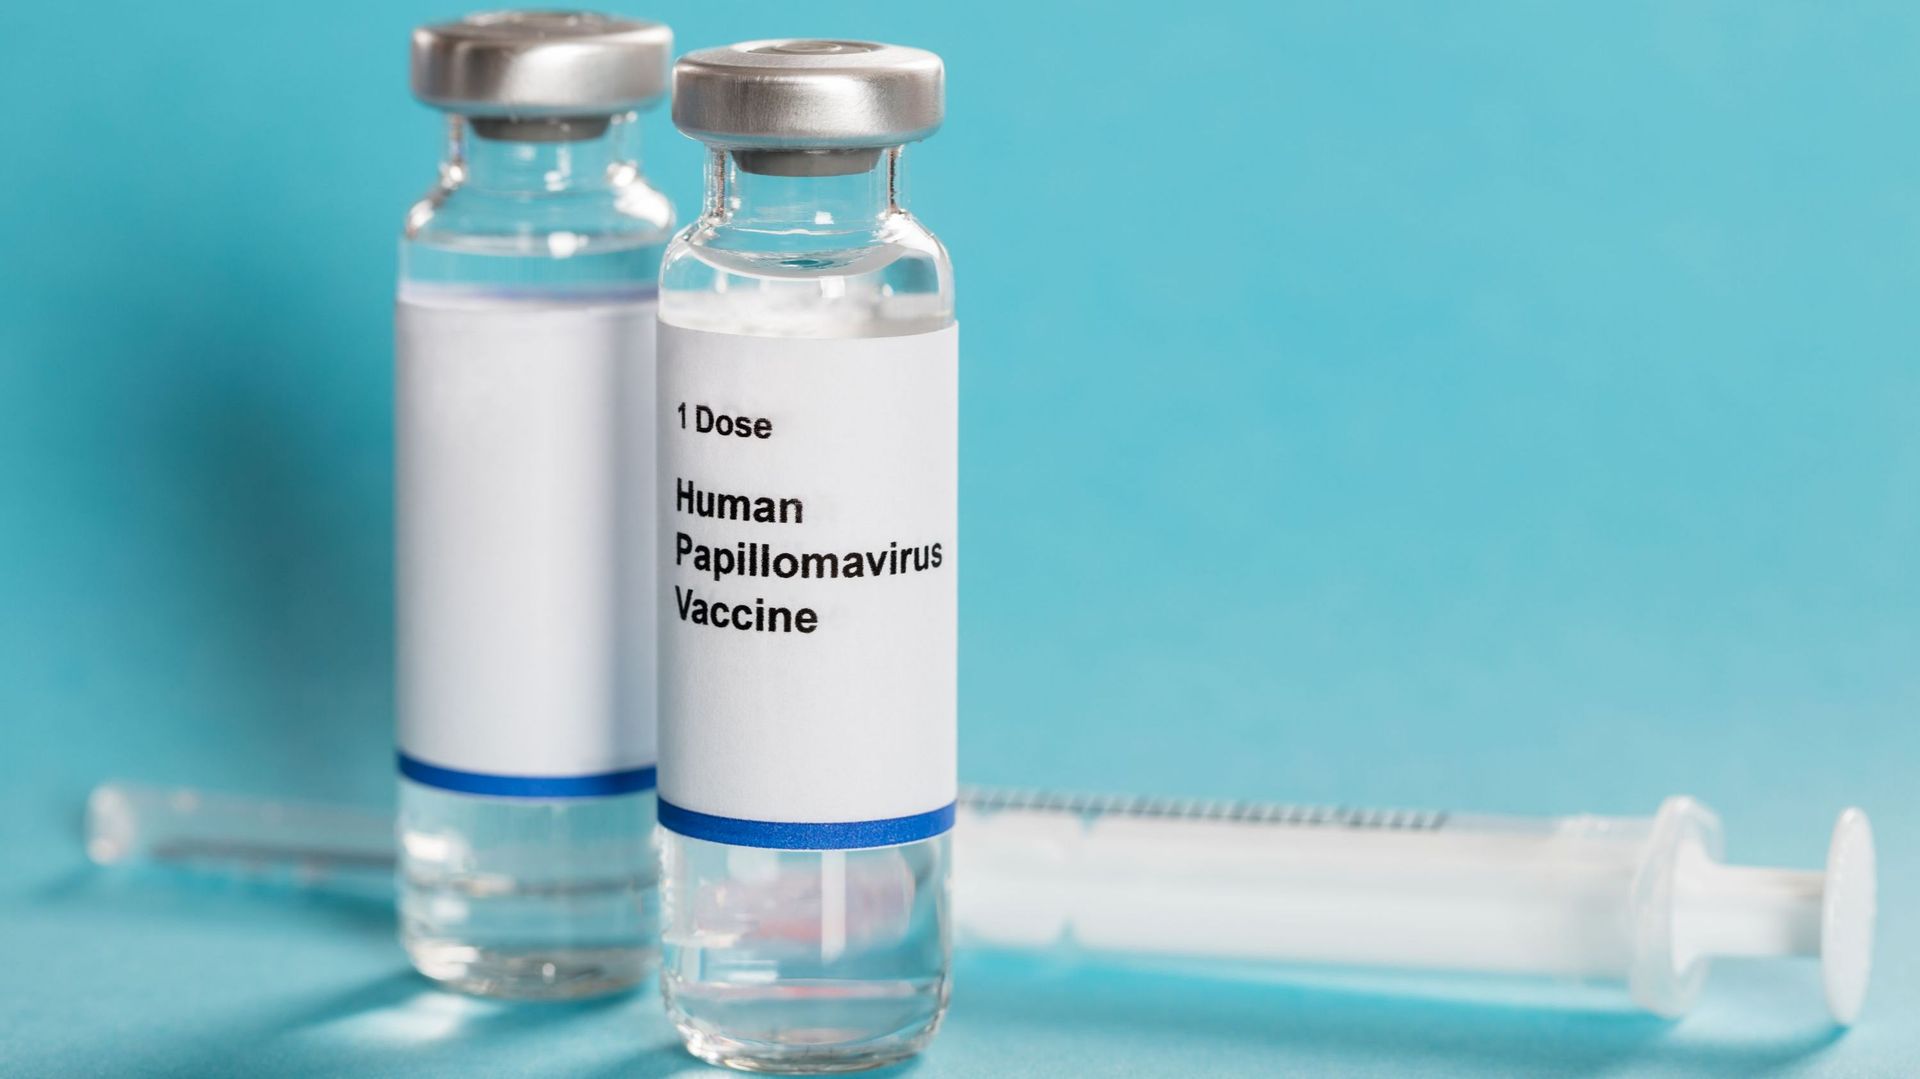 Human Papillomavirus Vaccine In Bottles With Syringe.